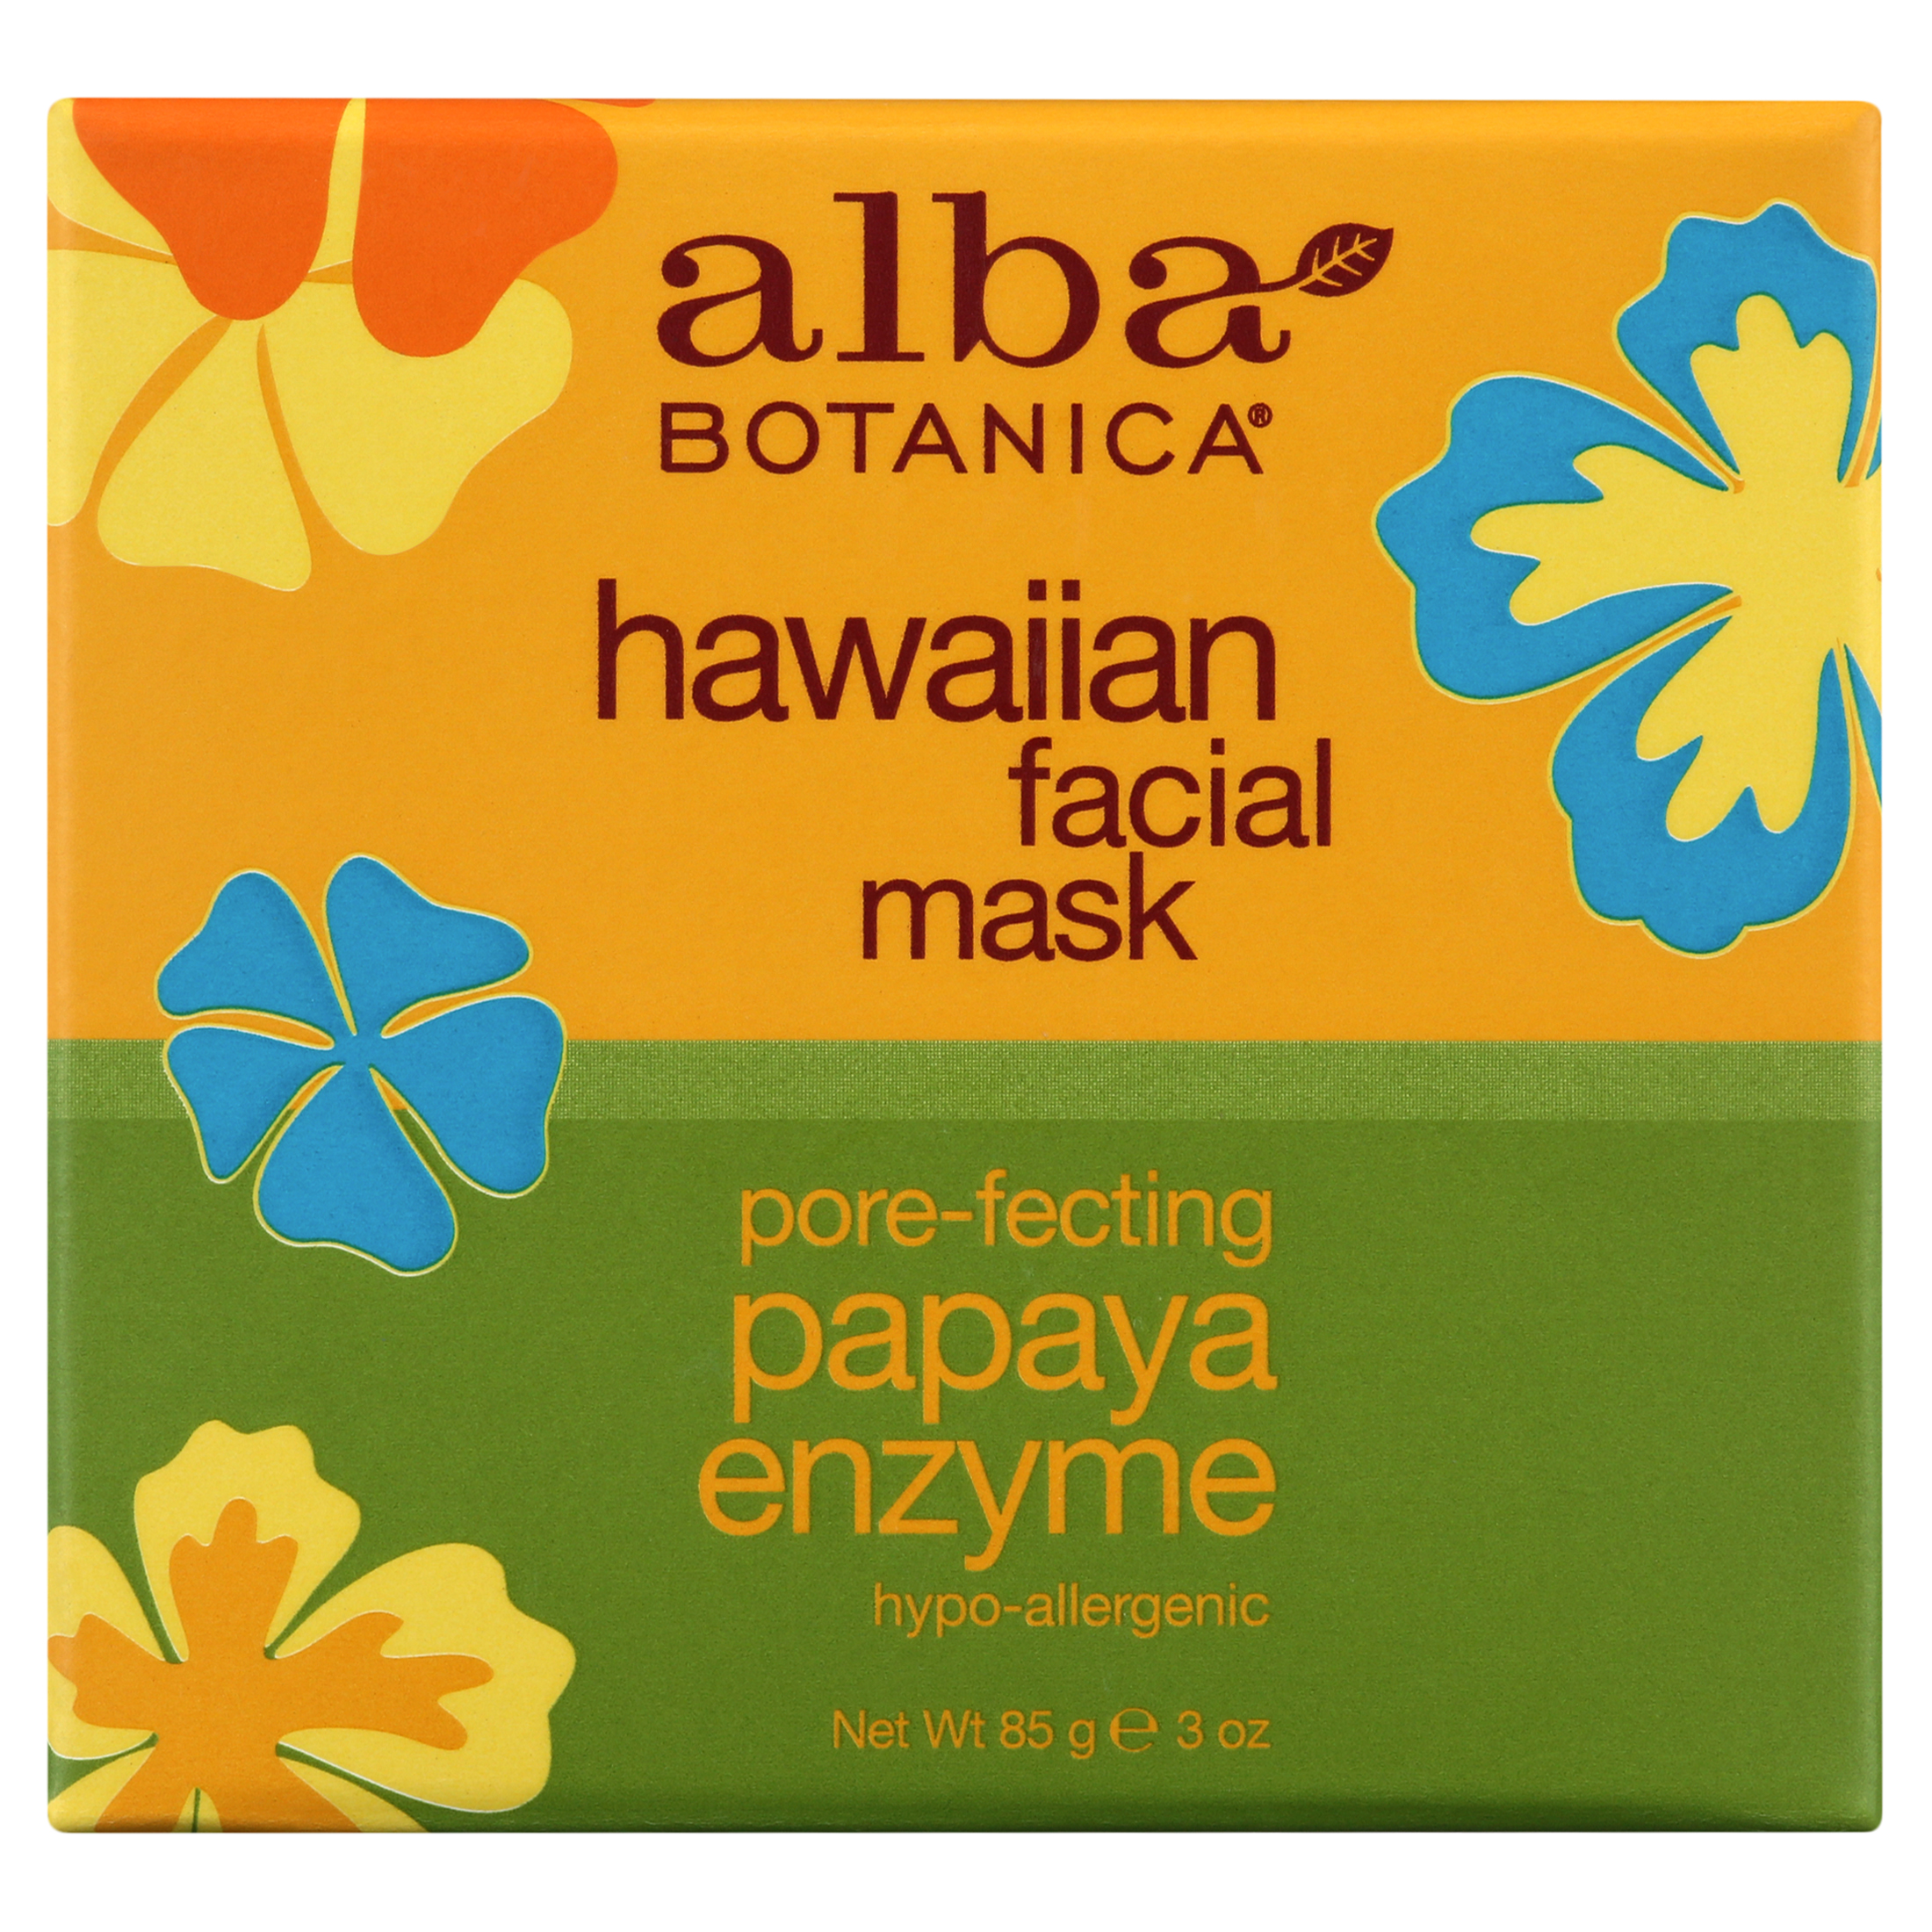 Alba Botanica Pore-Fecting Papaya Enzyme Hawaiian Facial Mask, 3 oz. - image 5 of 7